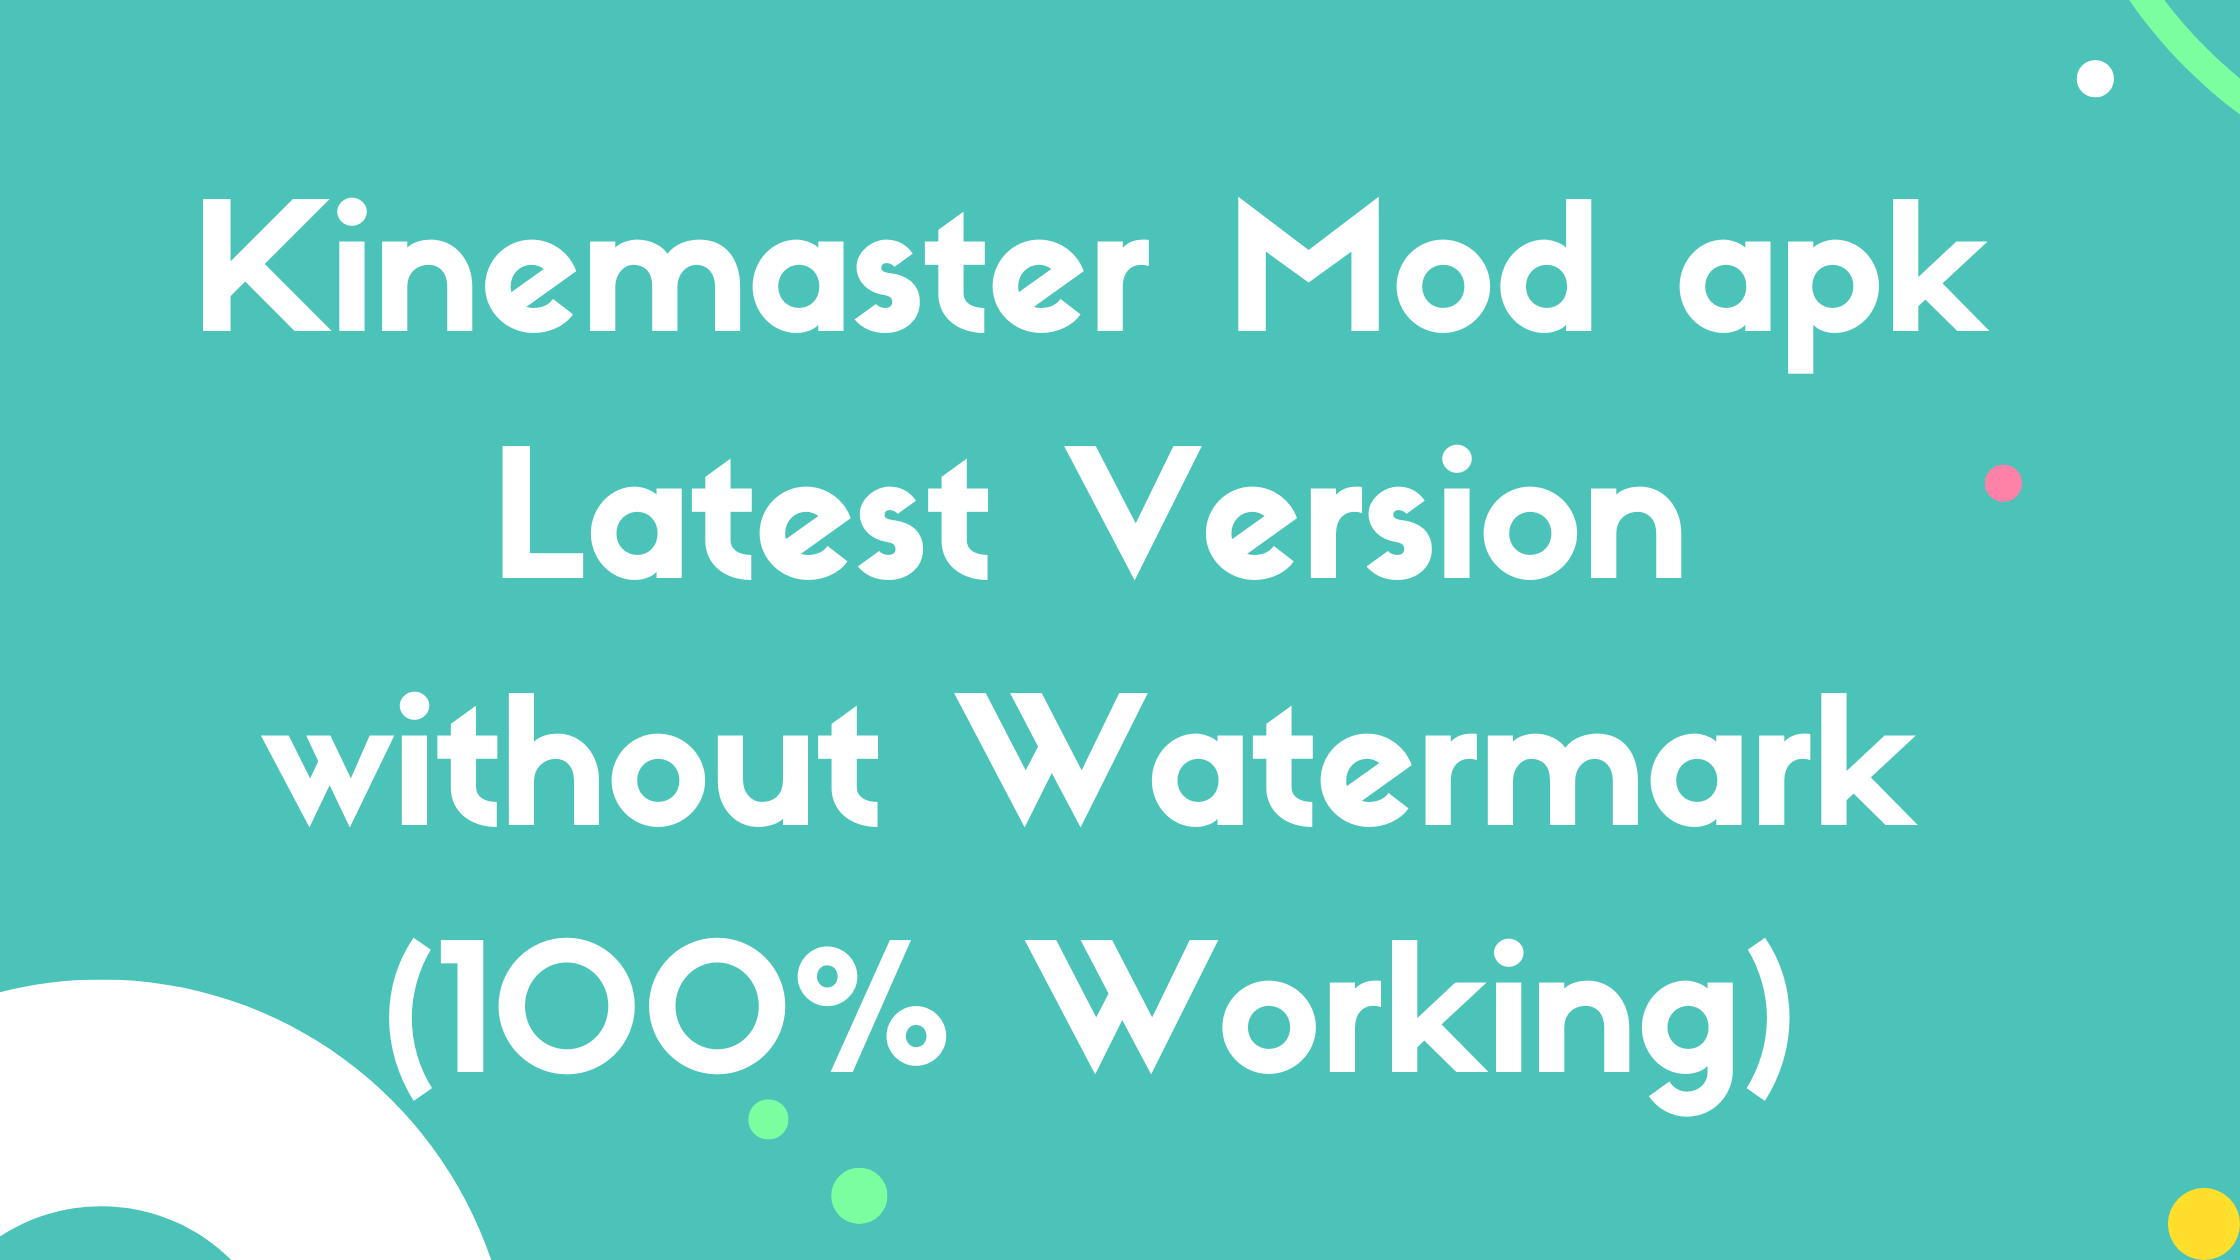 Kinemaster Mod apk Latest Version without Watermark